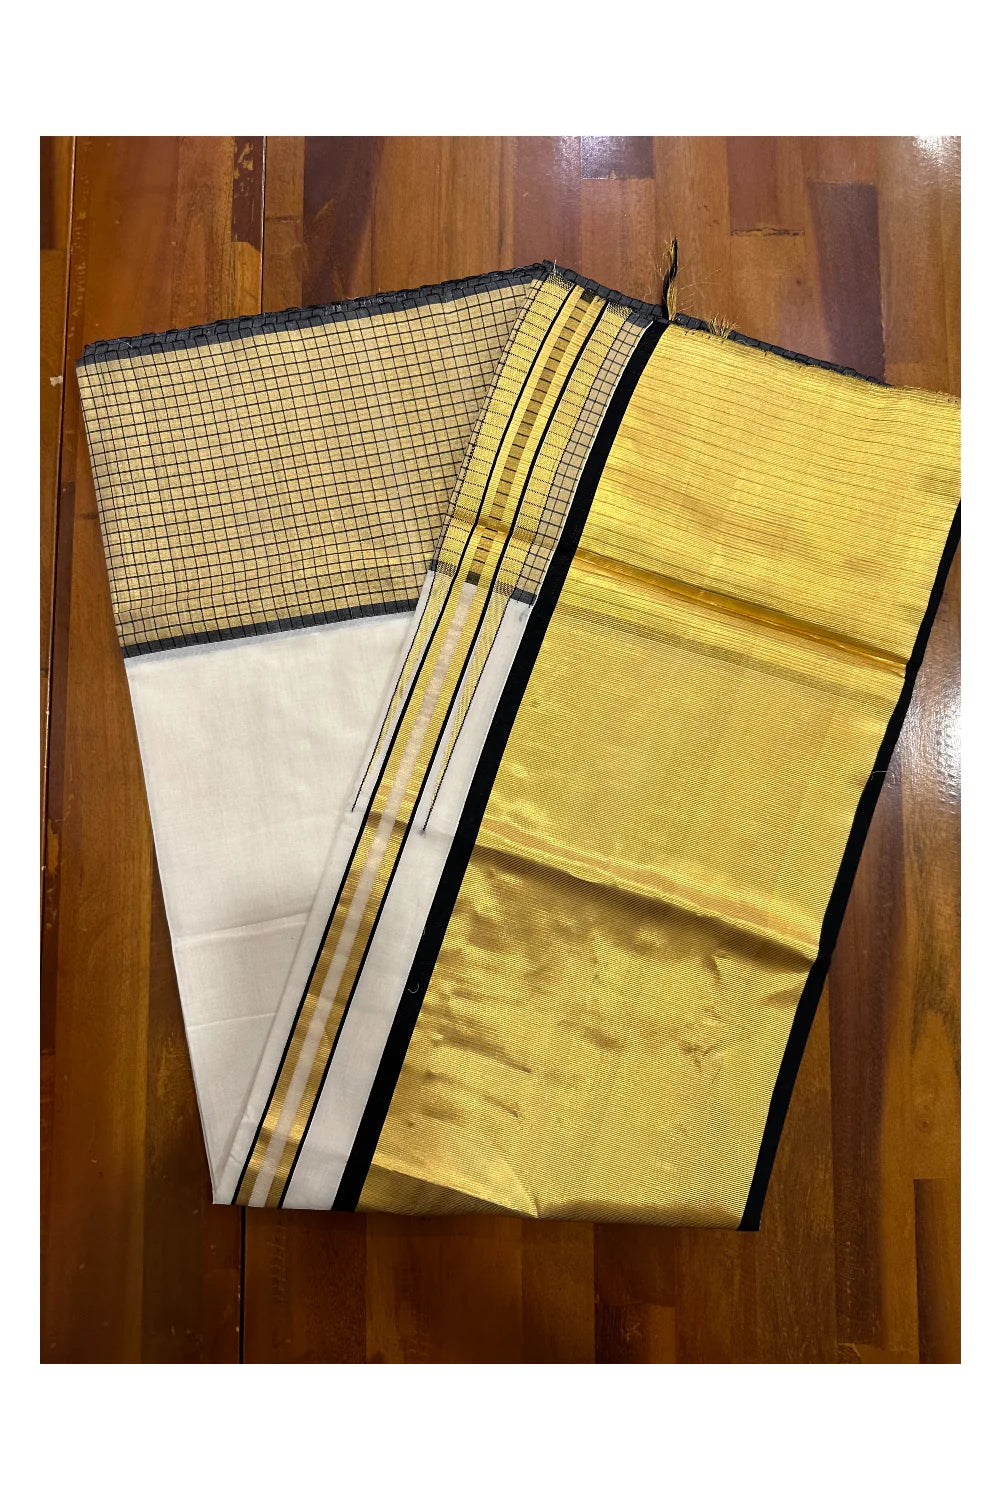 Southloom Handloom Premium Cotton Saree with Kasavu and Colour Check Design Border